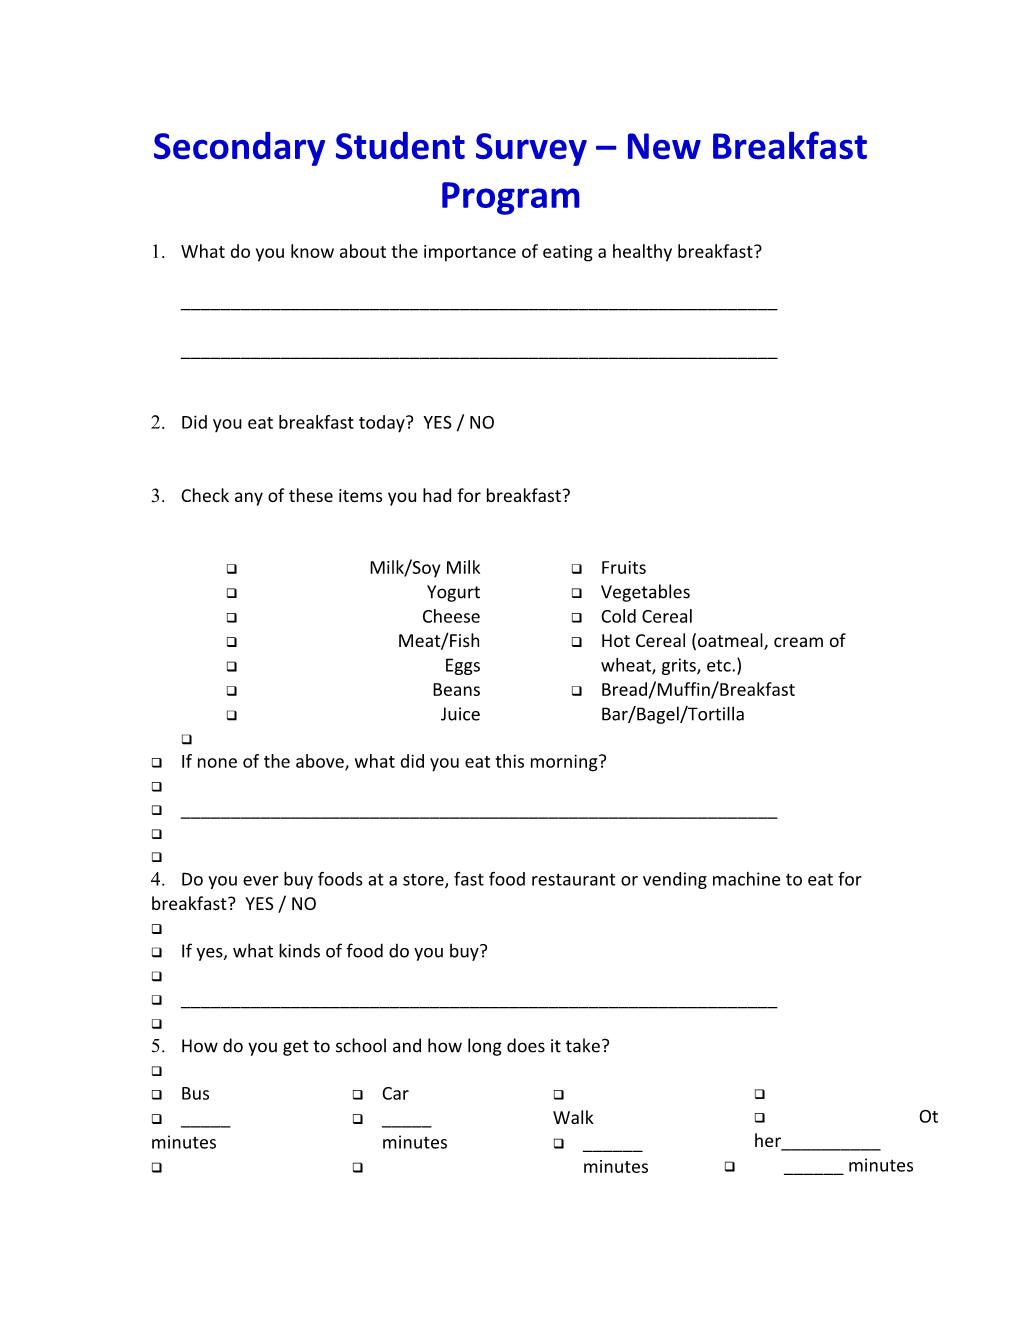 Secondary Student Survey New Breakfast Program